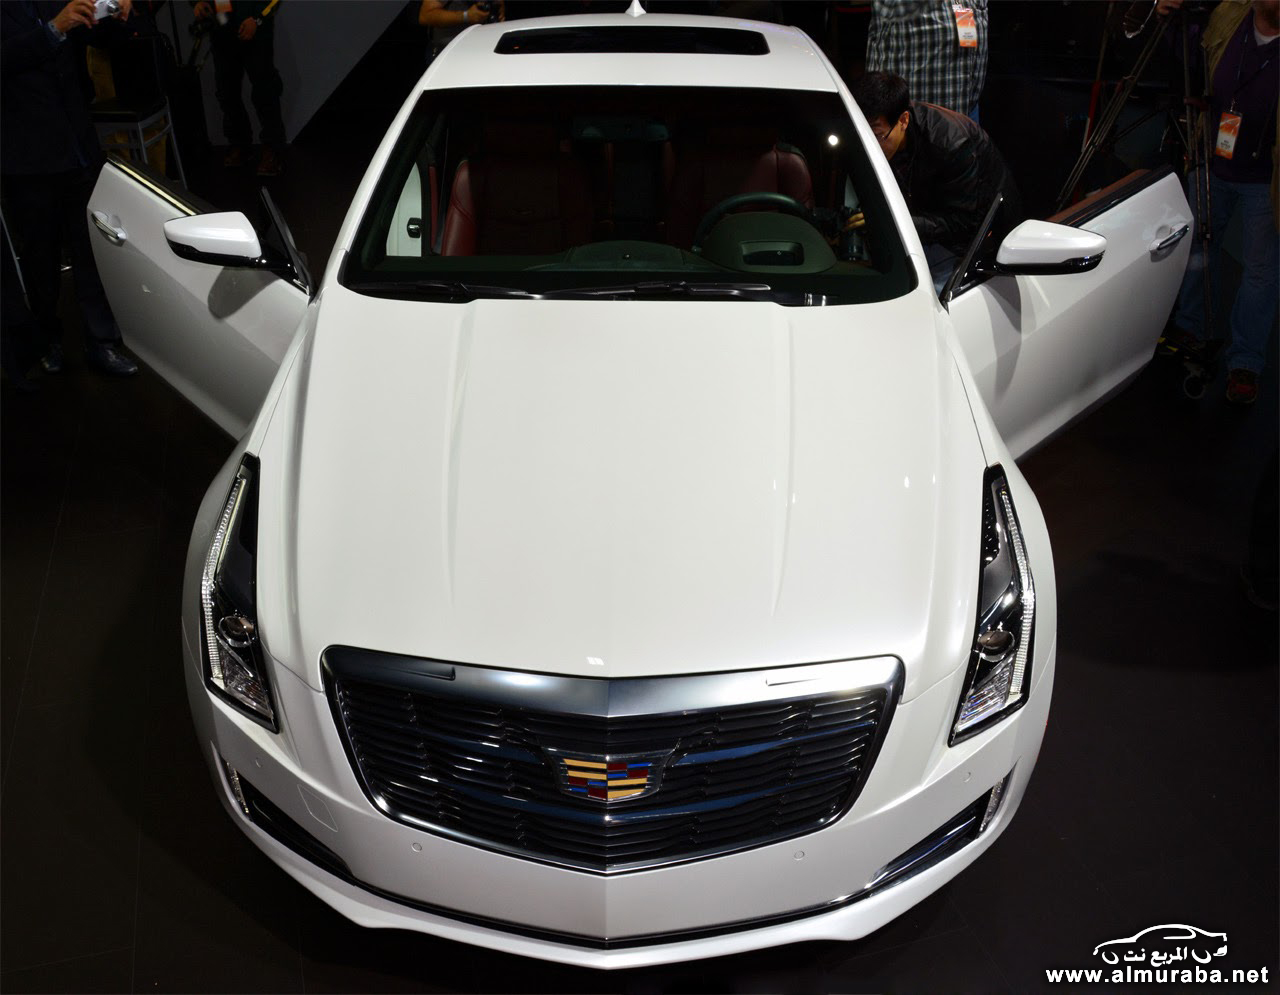 2015 Cadillac ATS Coupe Detroit 2014 Photos (18)